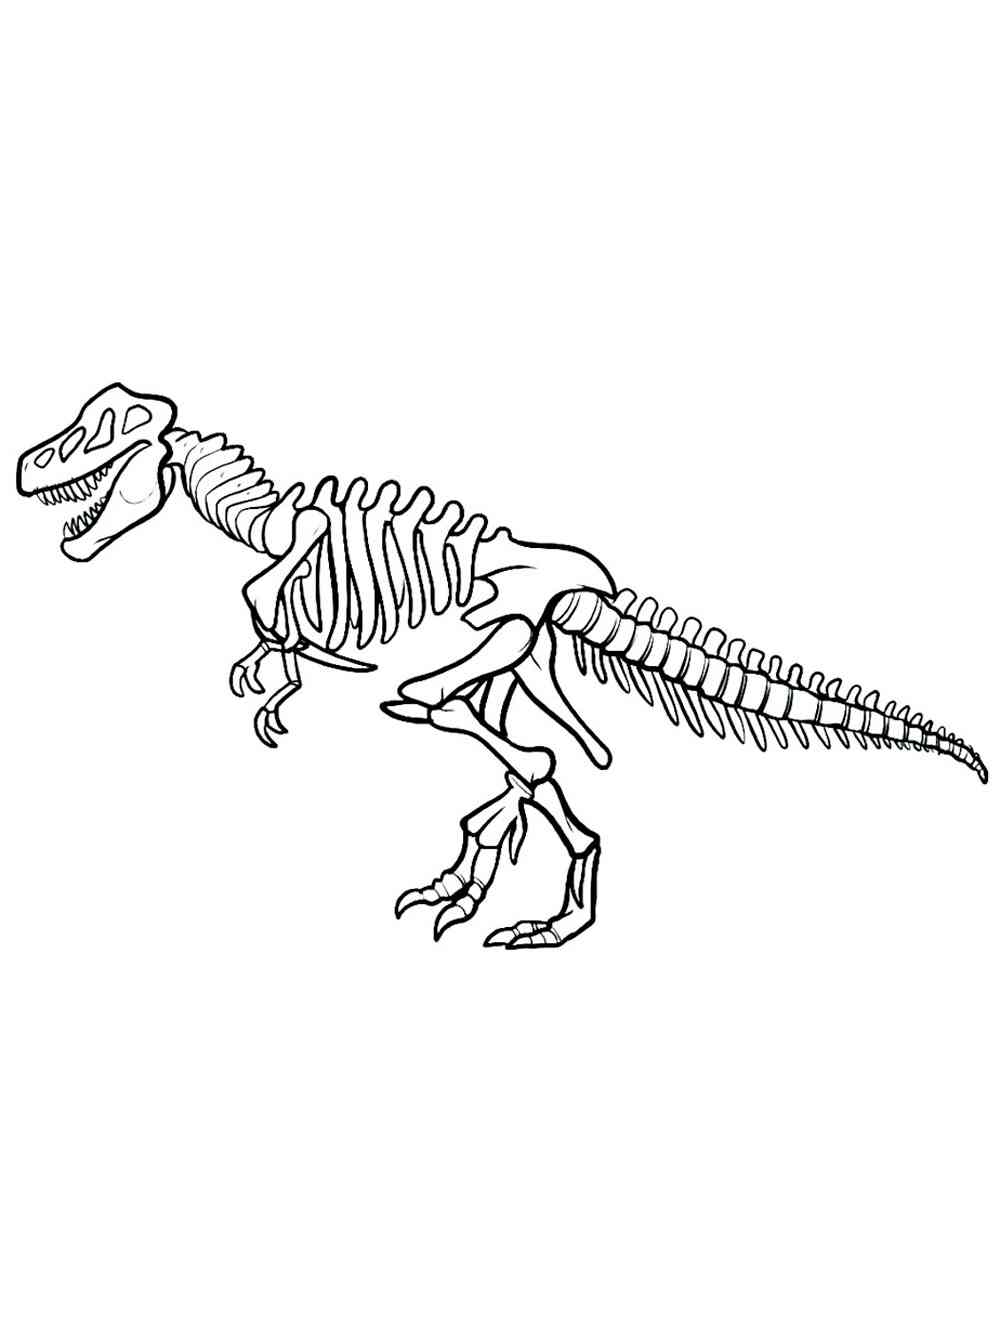 Tyrannosaurus Skeleton coloring page